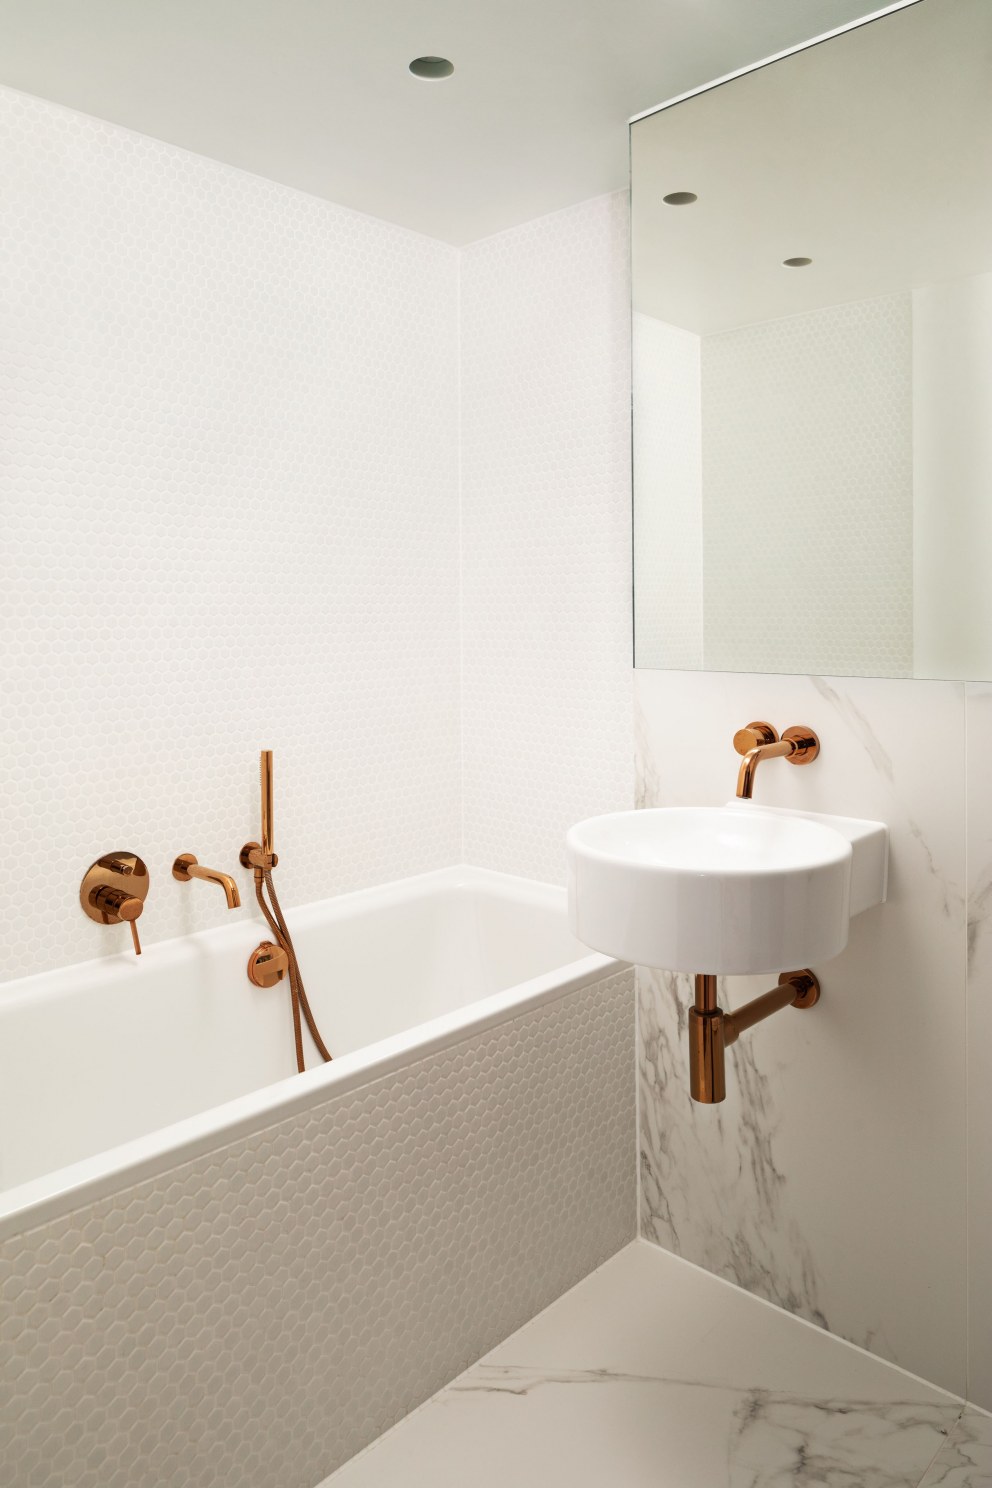 Maida Vale Private Residence | Communal bathroom | Interior Designers